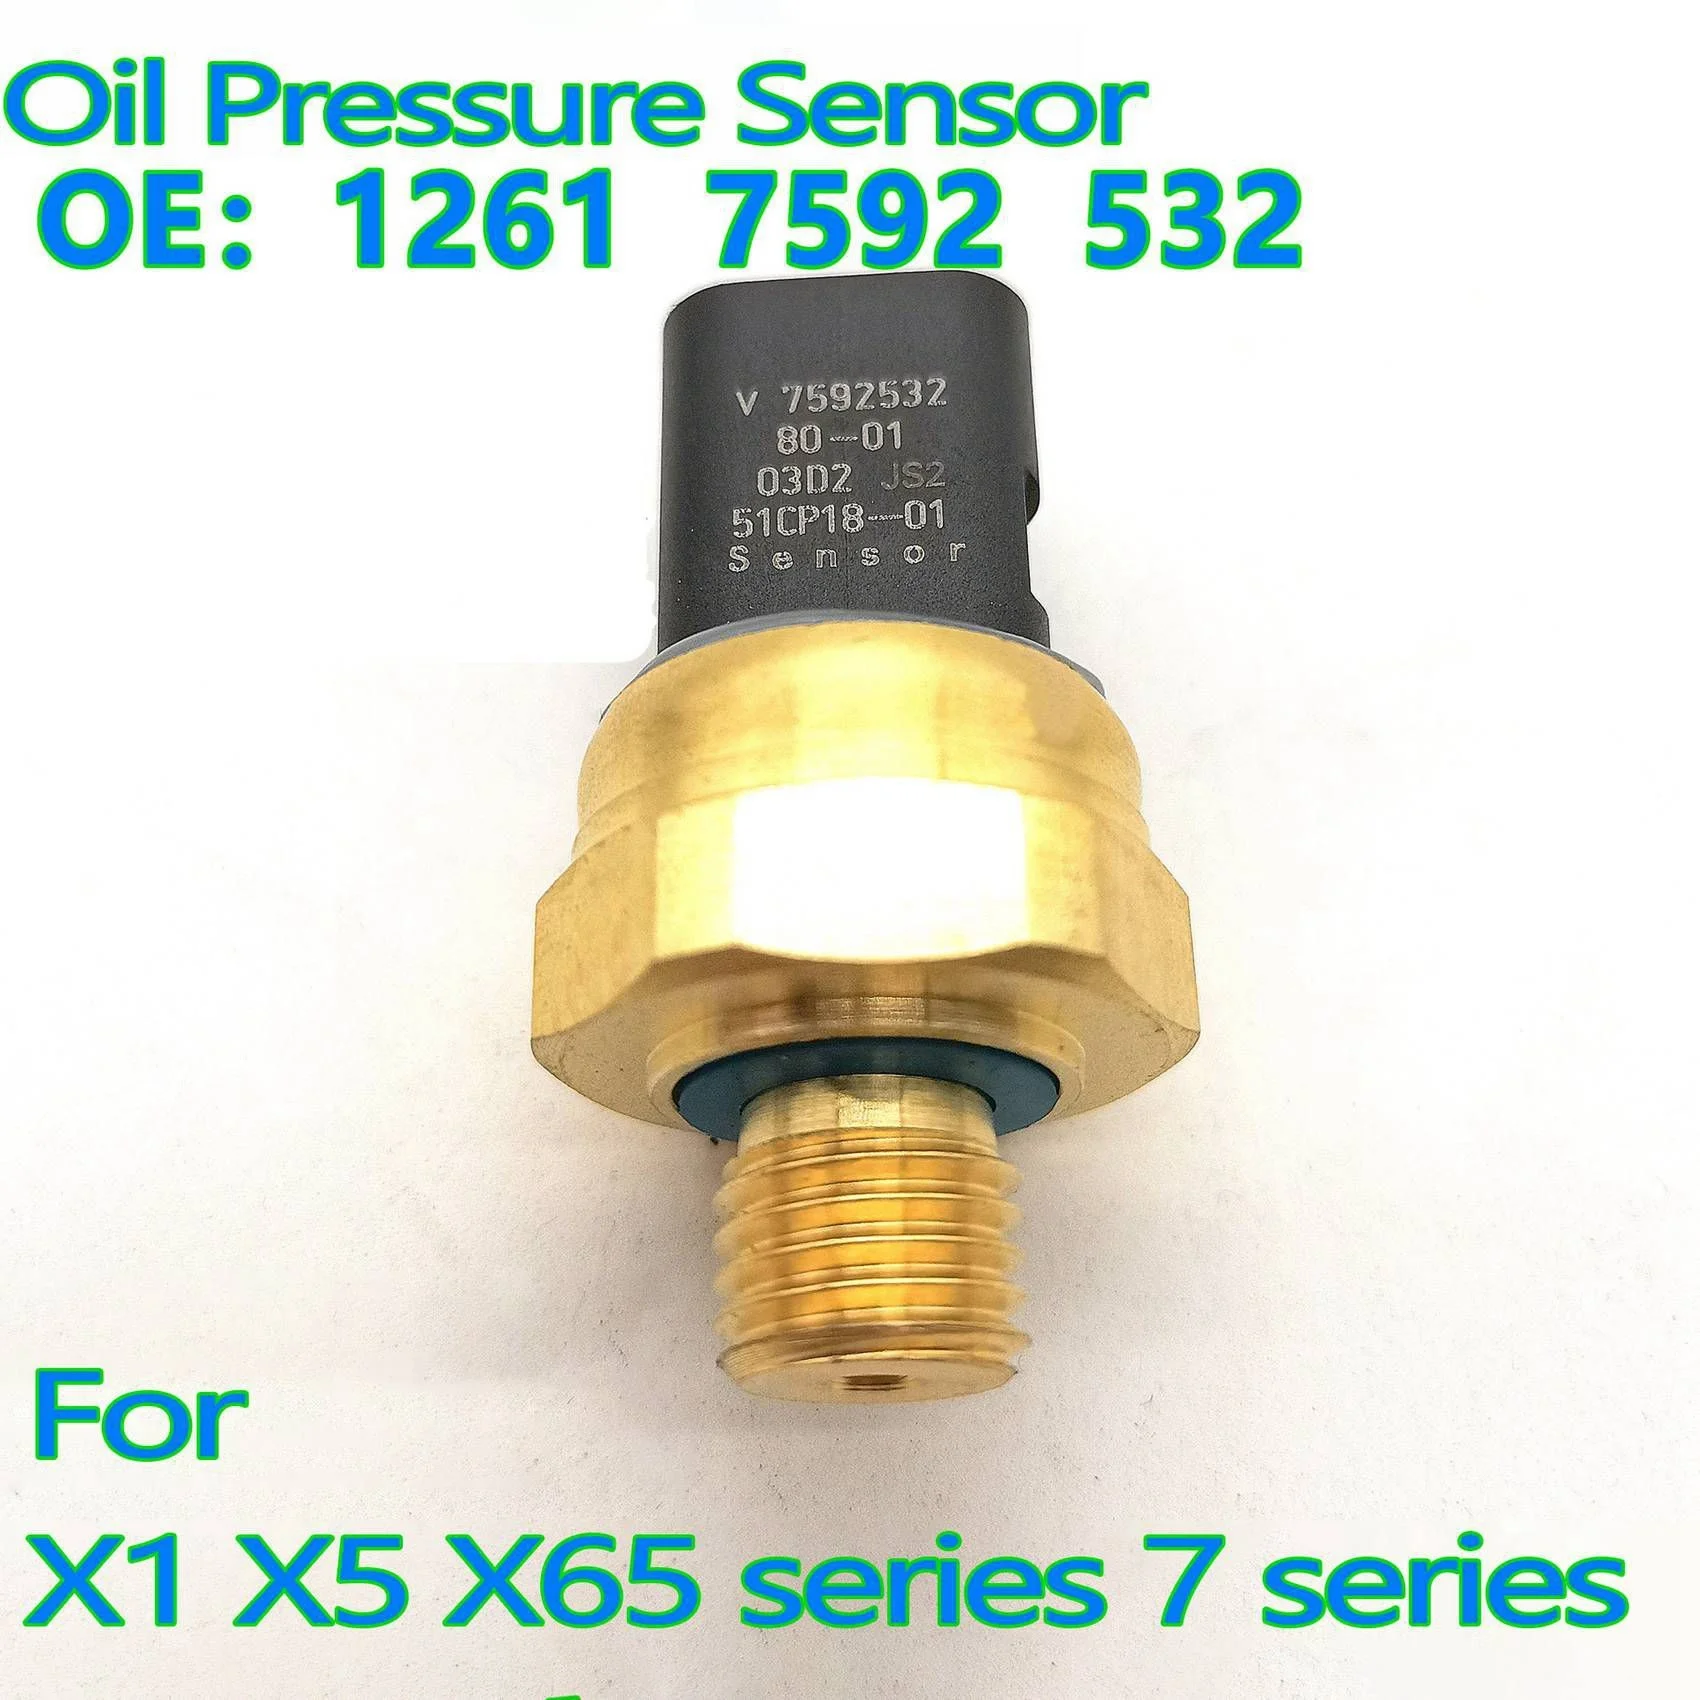 2PCS Oil Pressure Sensor 12617592532 51C918-01 for-BMW M235I 335I 435I 535 X3 X4 X5 X6 images - 6